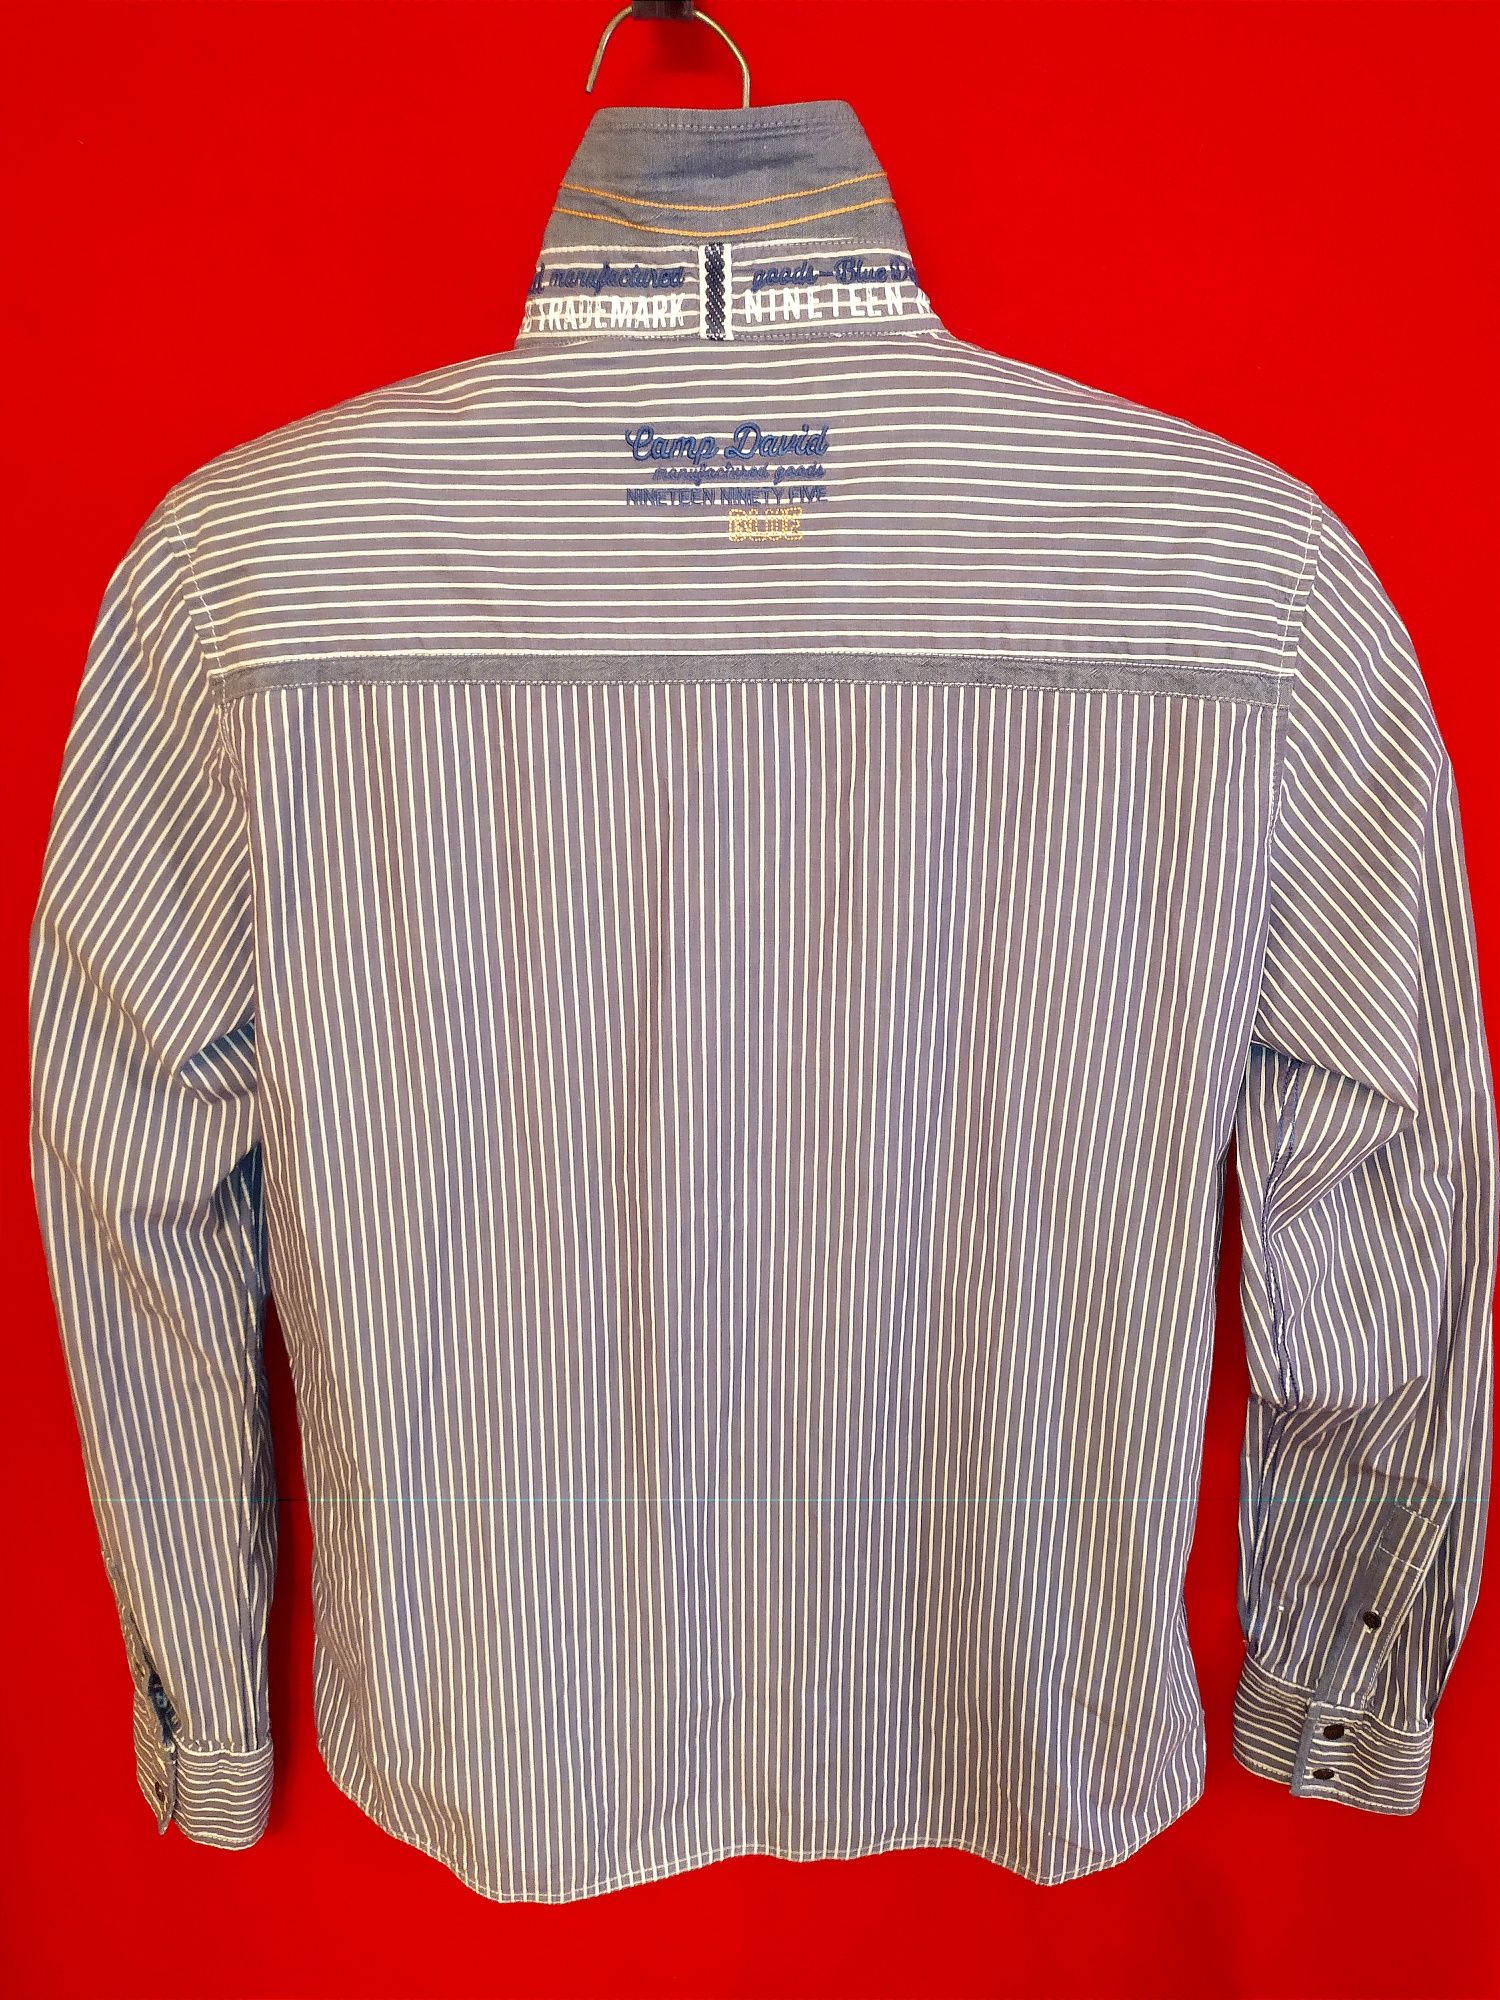 Рубашка CAMP DAVID Германия р.50-52-54, cotton 100%